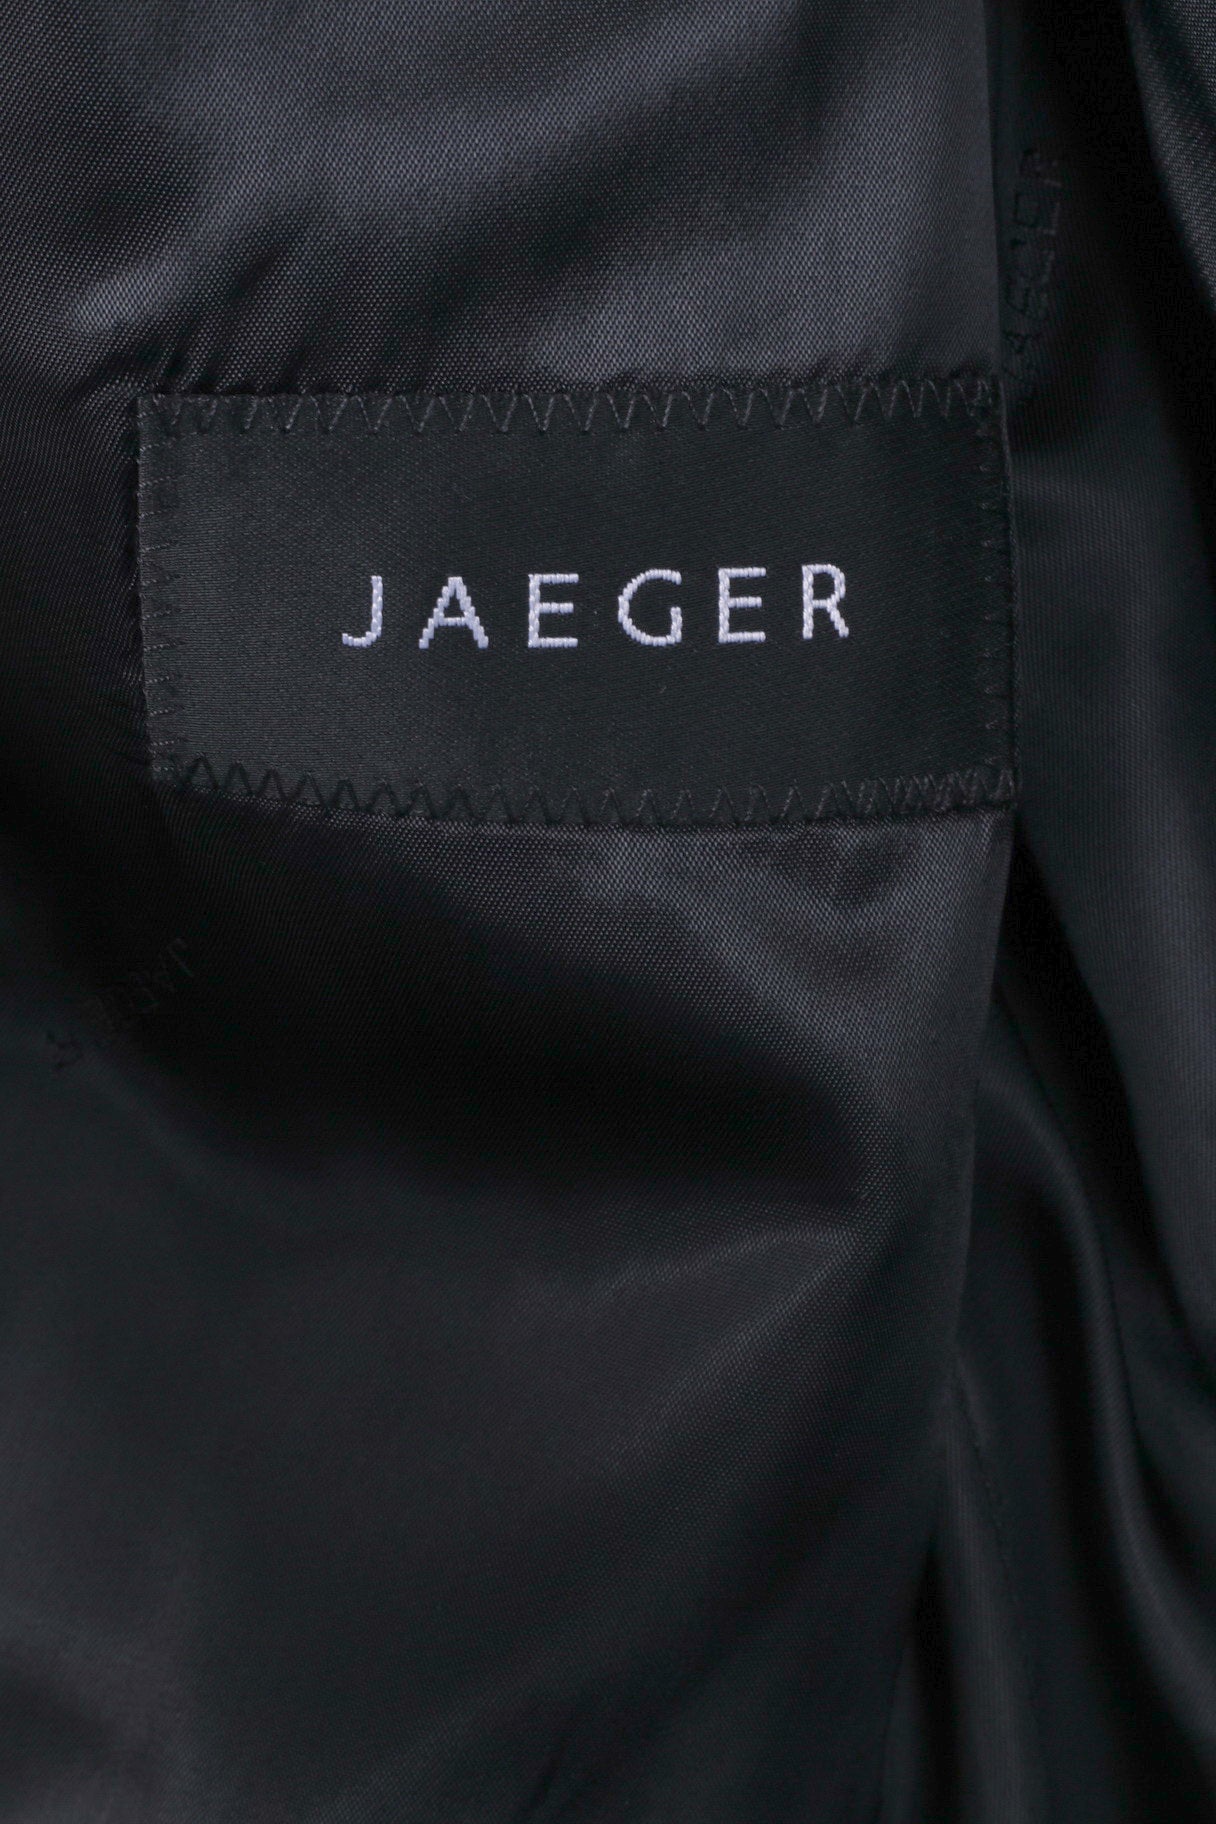 Jaeger Uomo 40 Blazer lungo Grigio monopetto Spalline superiori Giacca 100% lana 